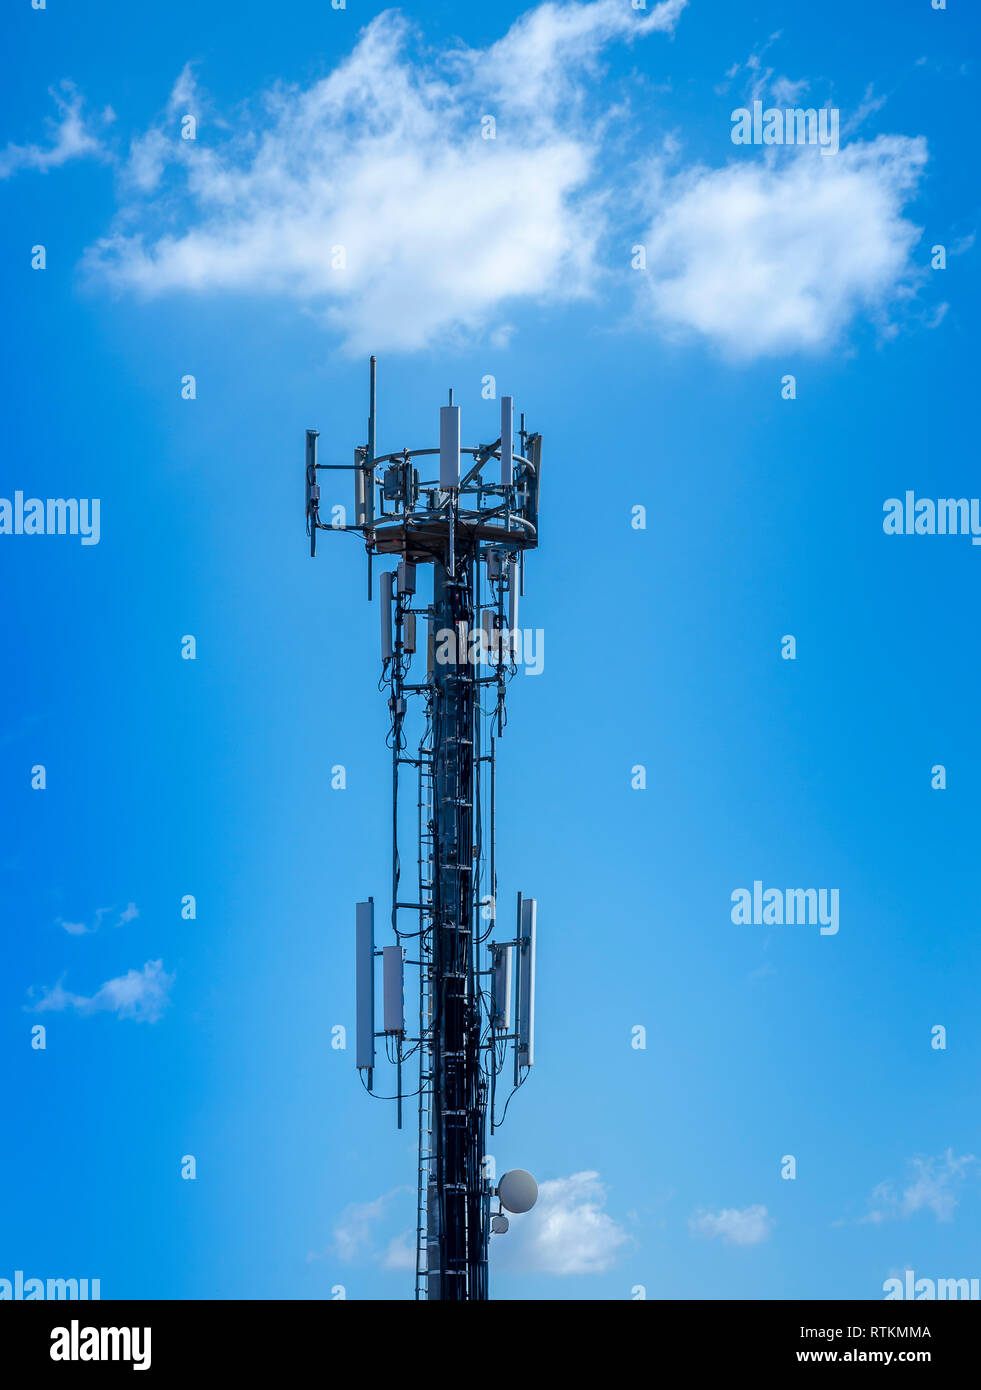 3G, 4G und 5G-Mobilfunk. Basisstation oder Base Transceiver Station. Telecommunication Tower. Drahtlose Kommunikation Antenne Sender. Stockfoto